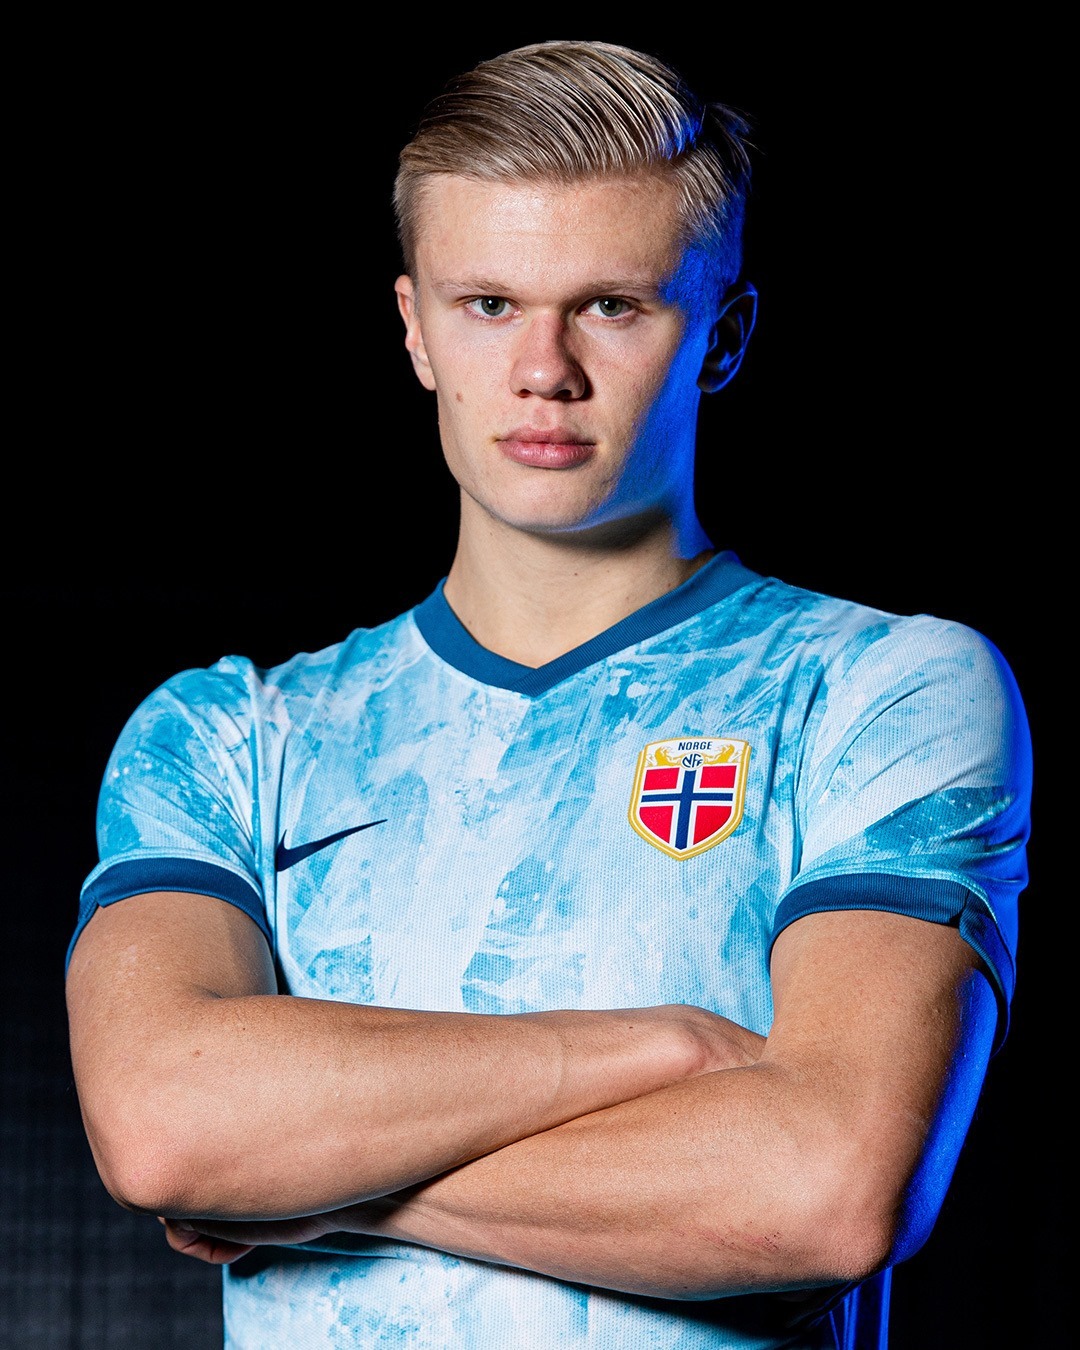 Norway Away Shirt 2020/21 HAALAND 9